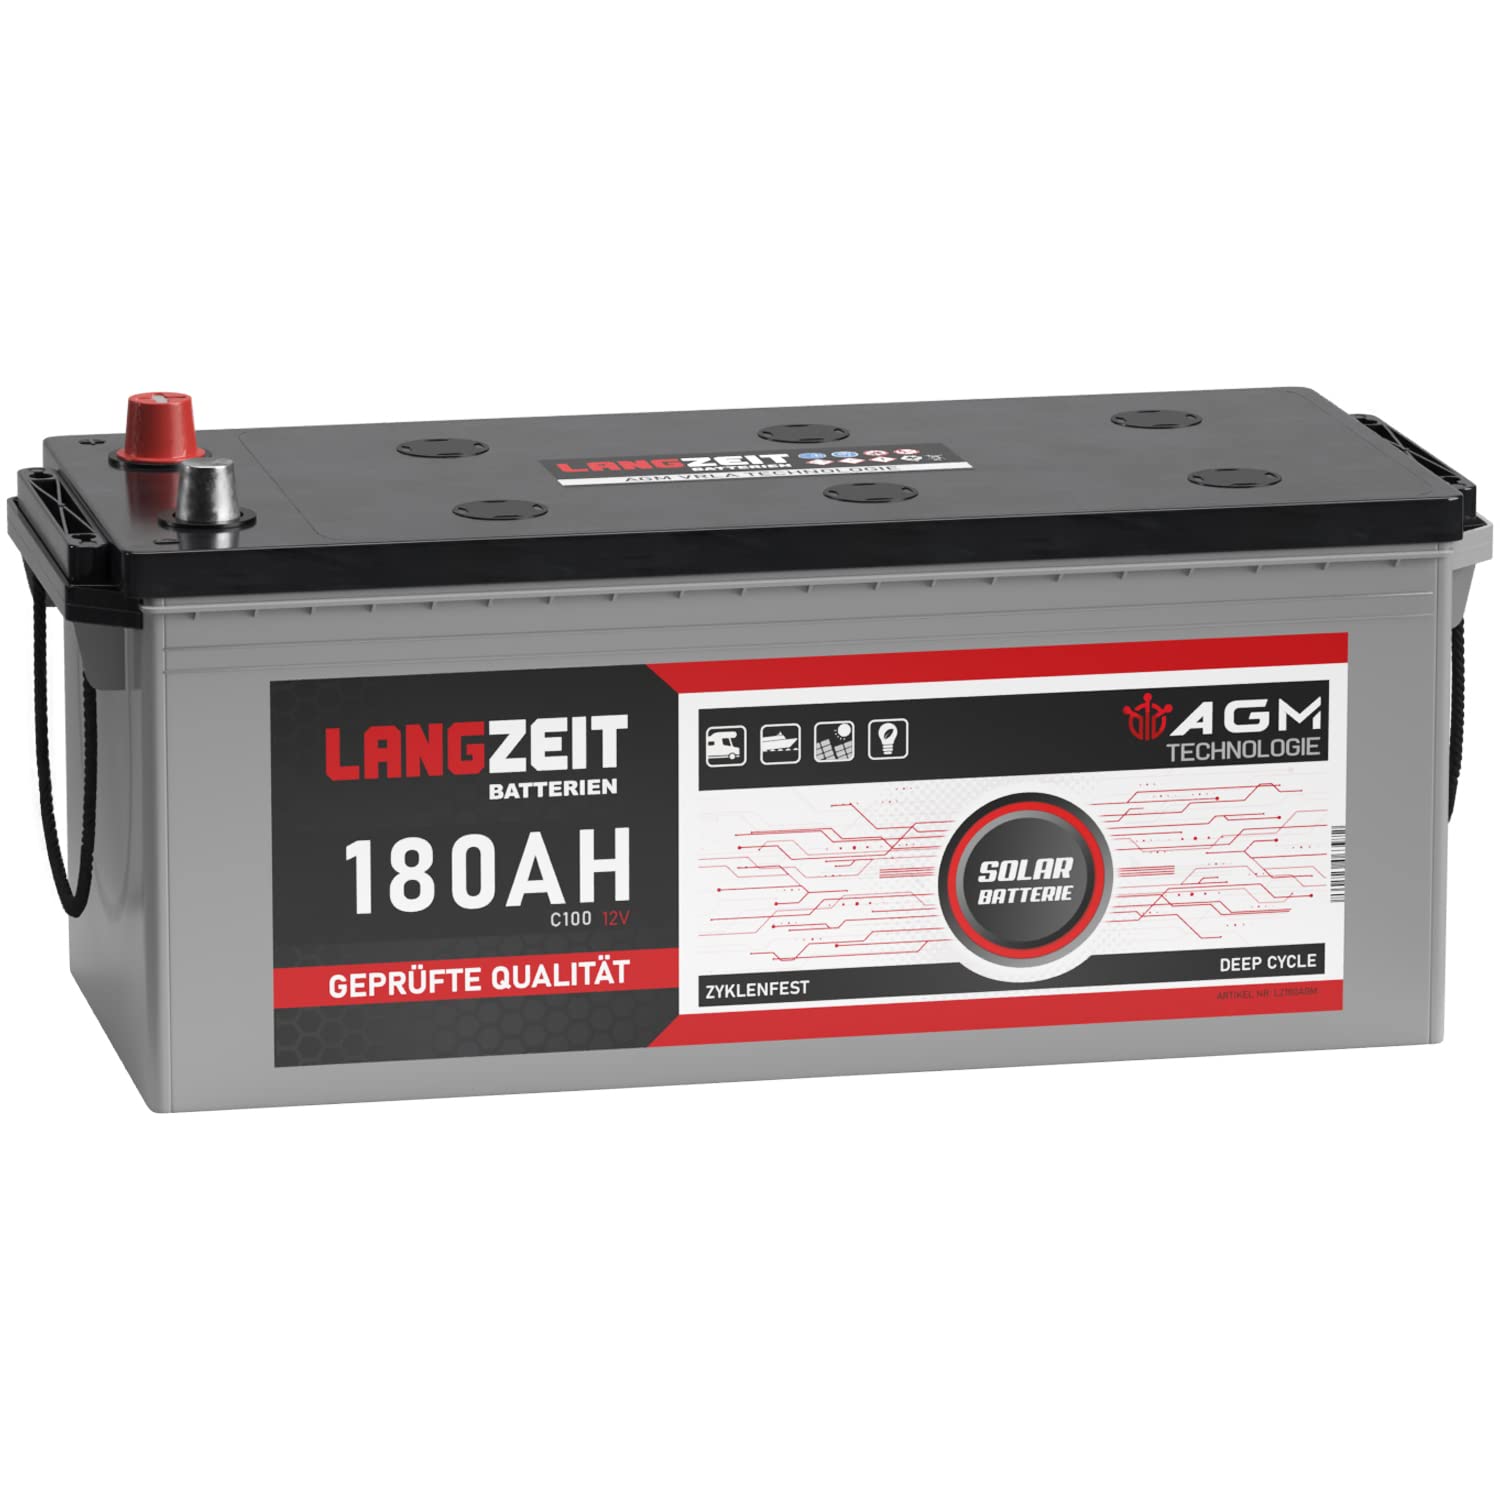 LANGZEIT AGM Batterie 180Ah 12V Solarbatterie Wohnmobil Batterie Bootsbatterie Mover Deep Cycle AGM zyklenfest wartungsfrei ersetzt 160Ah 170Ah von LANGZEIT Batterien